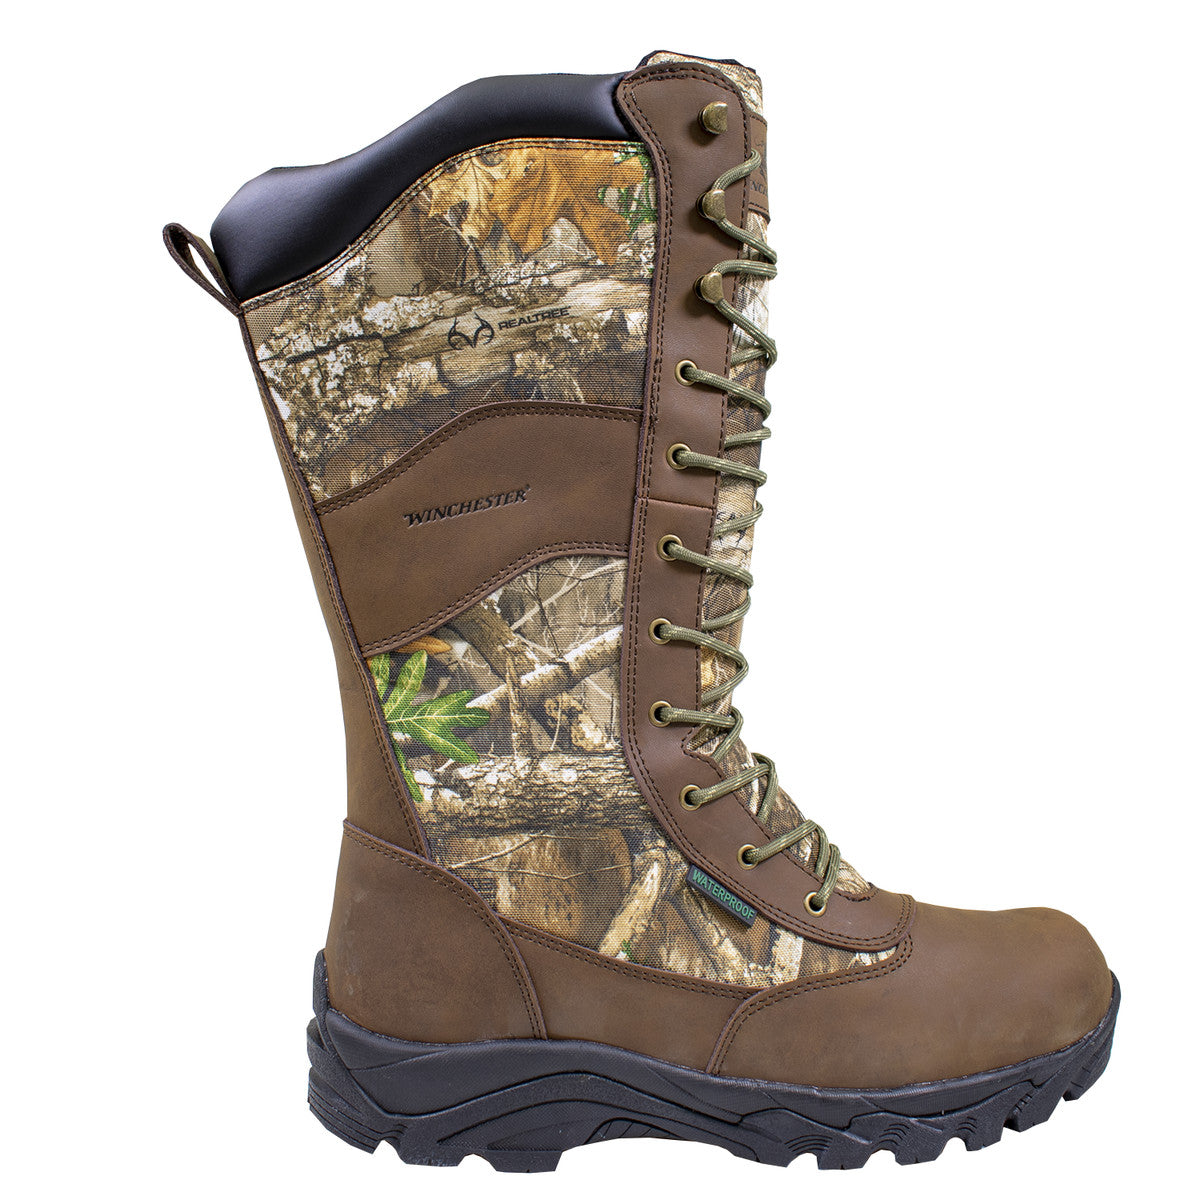 Winchester Vennom Snake Boot-Footwear-REALTREE EDGE-8-Kevin's Fine Outdoor Gear & Apparel